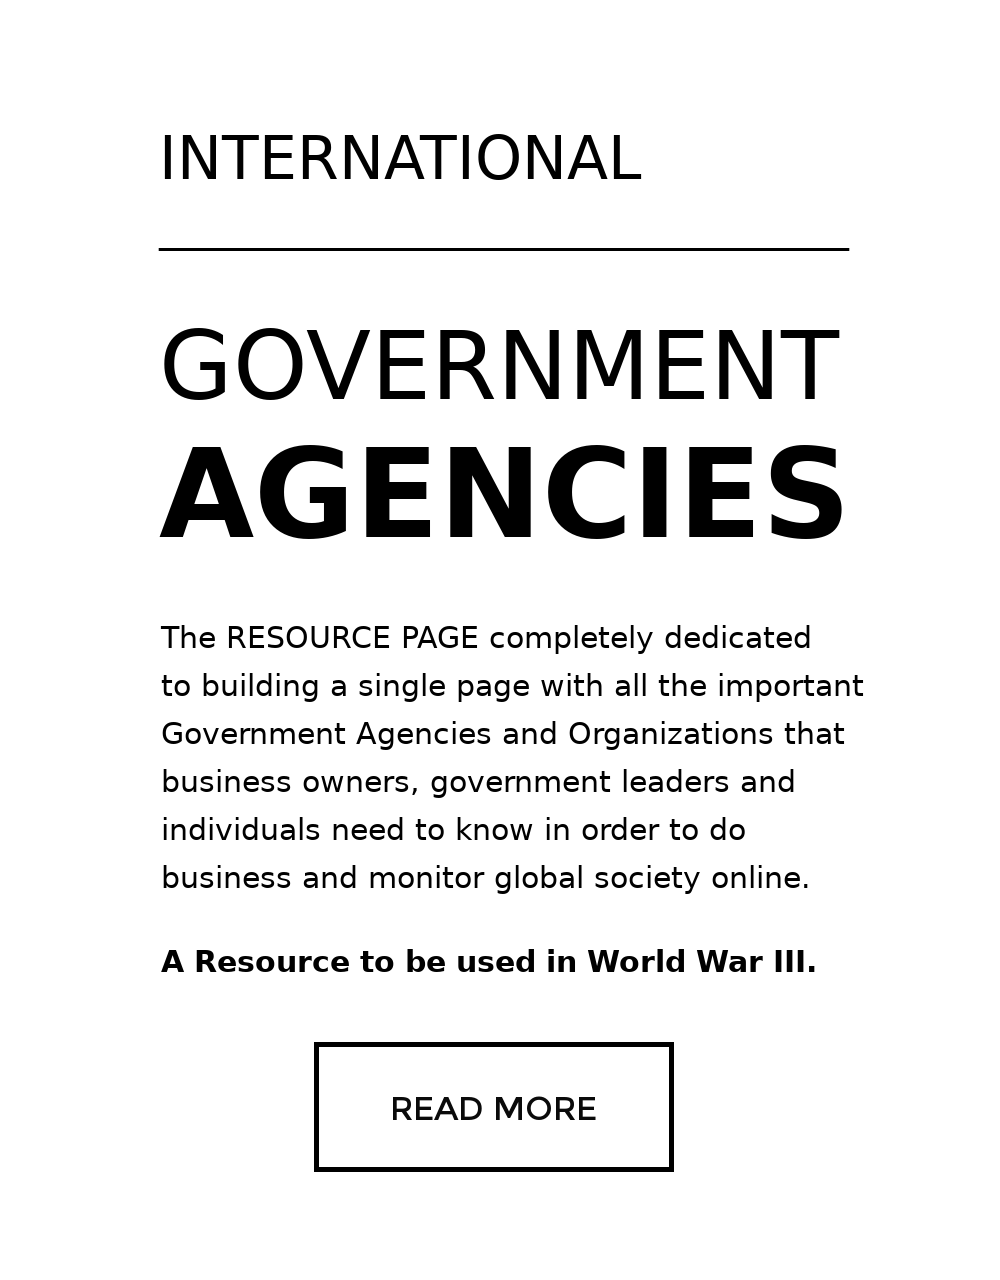 governments-worldwide-International-card-v2